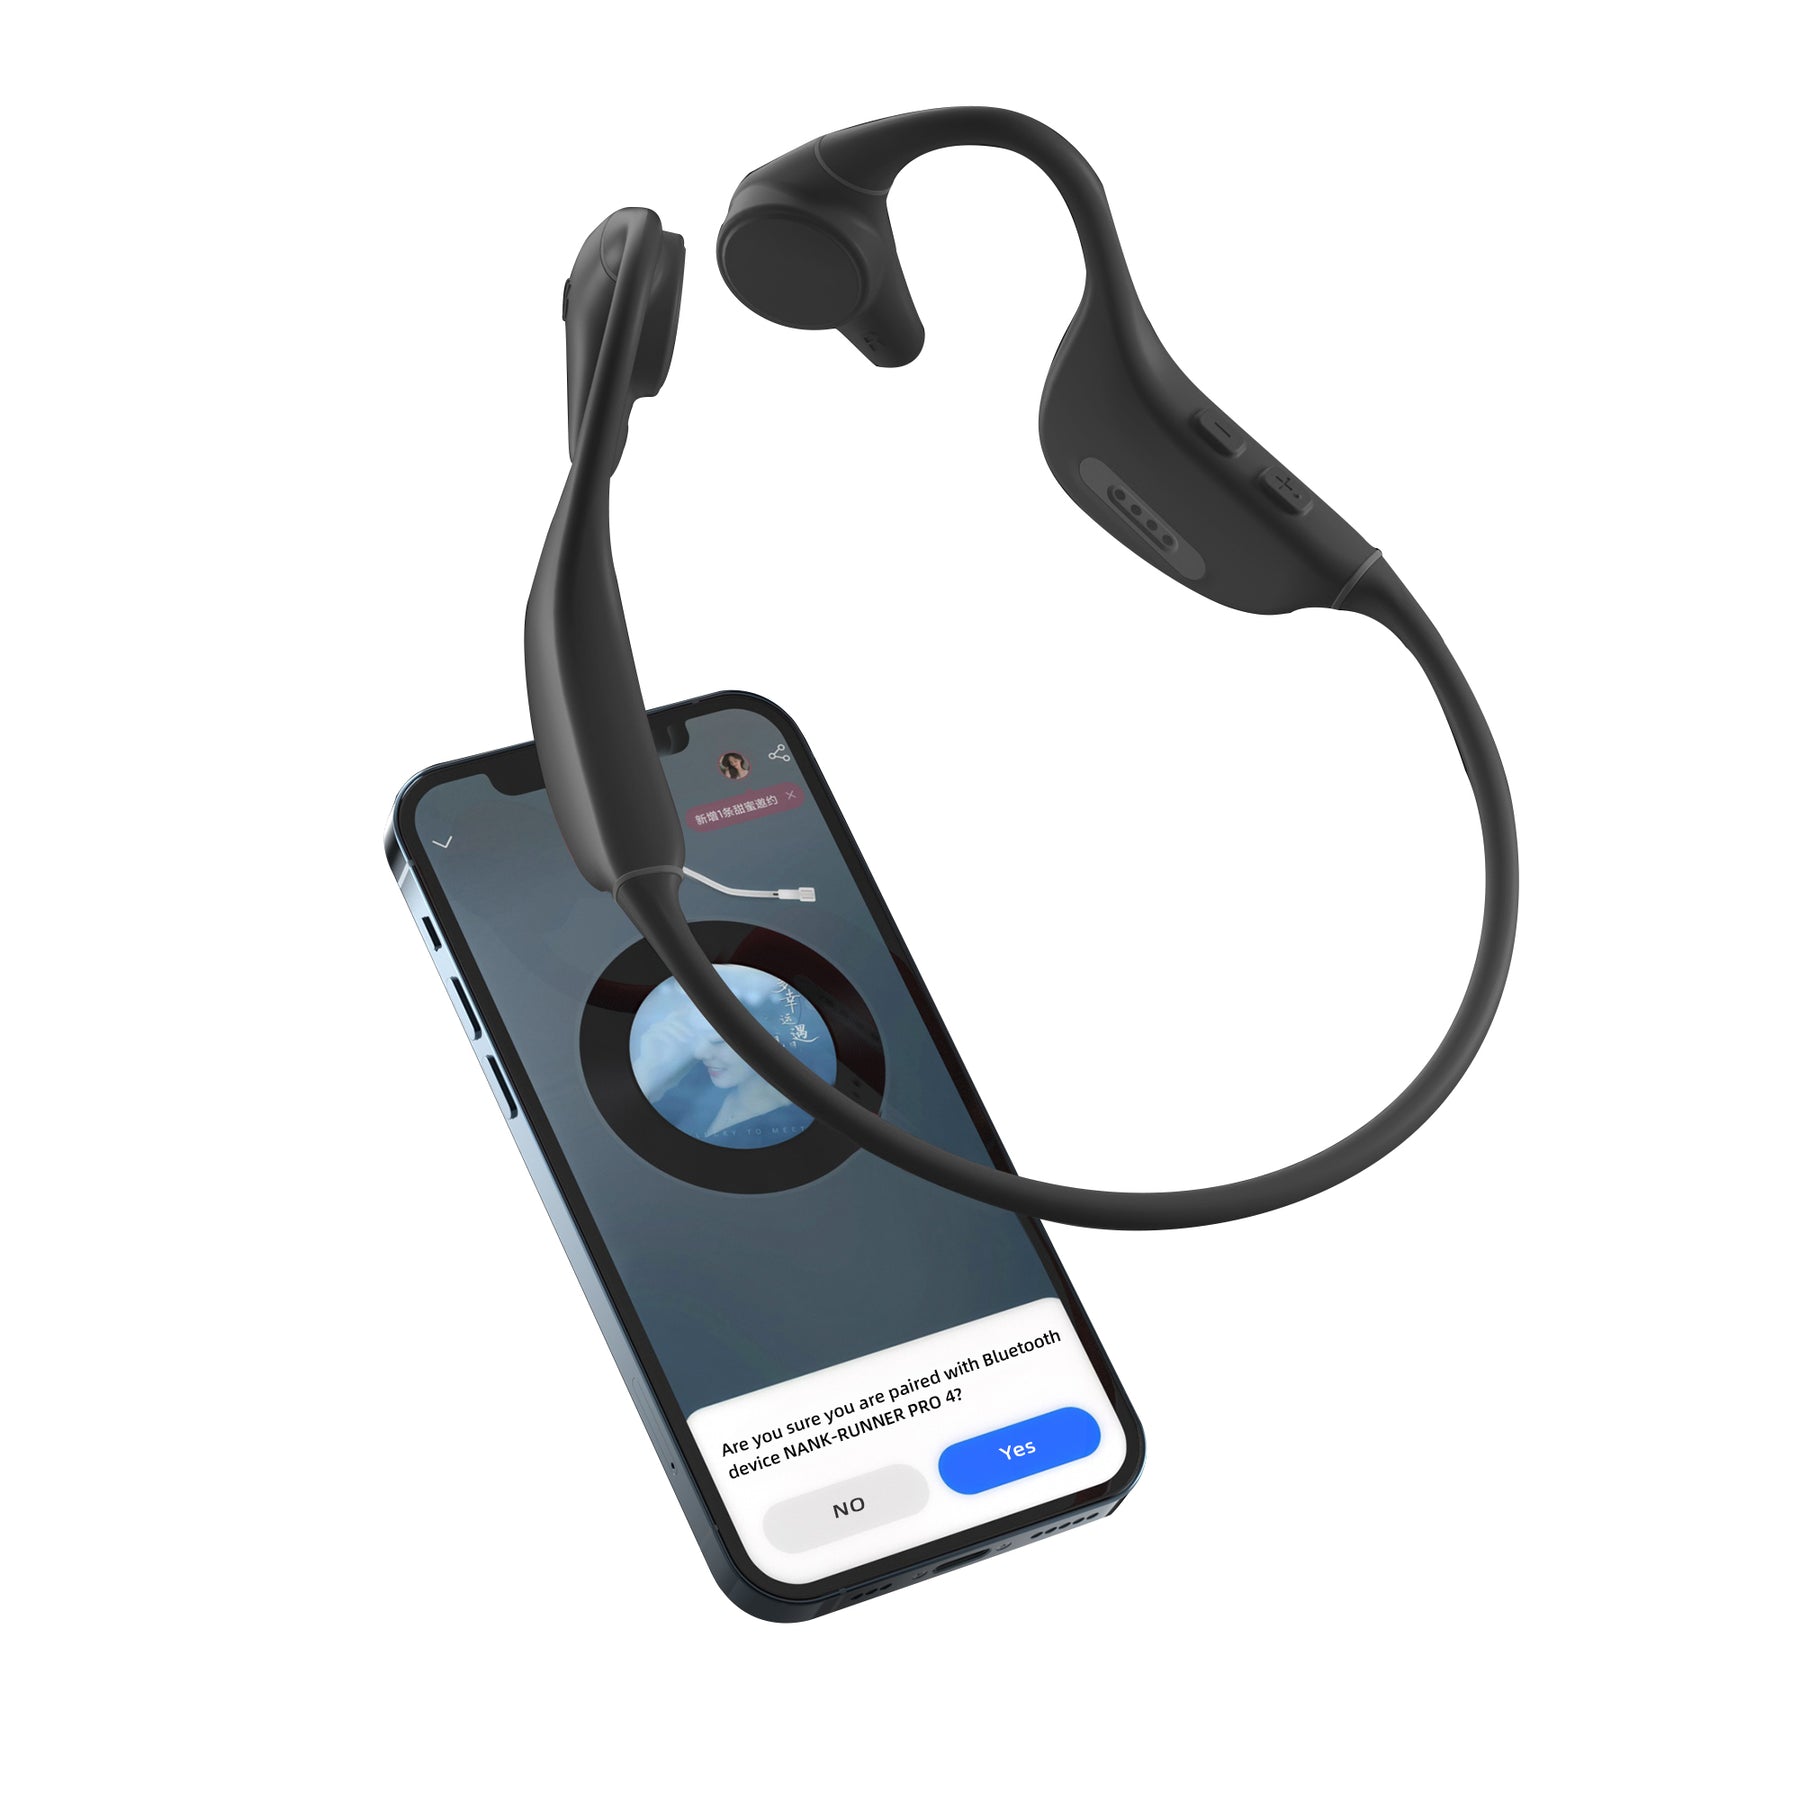 The Naenka bone conduction headset has Bluetooth 5.3